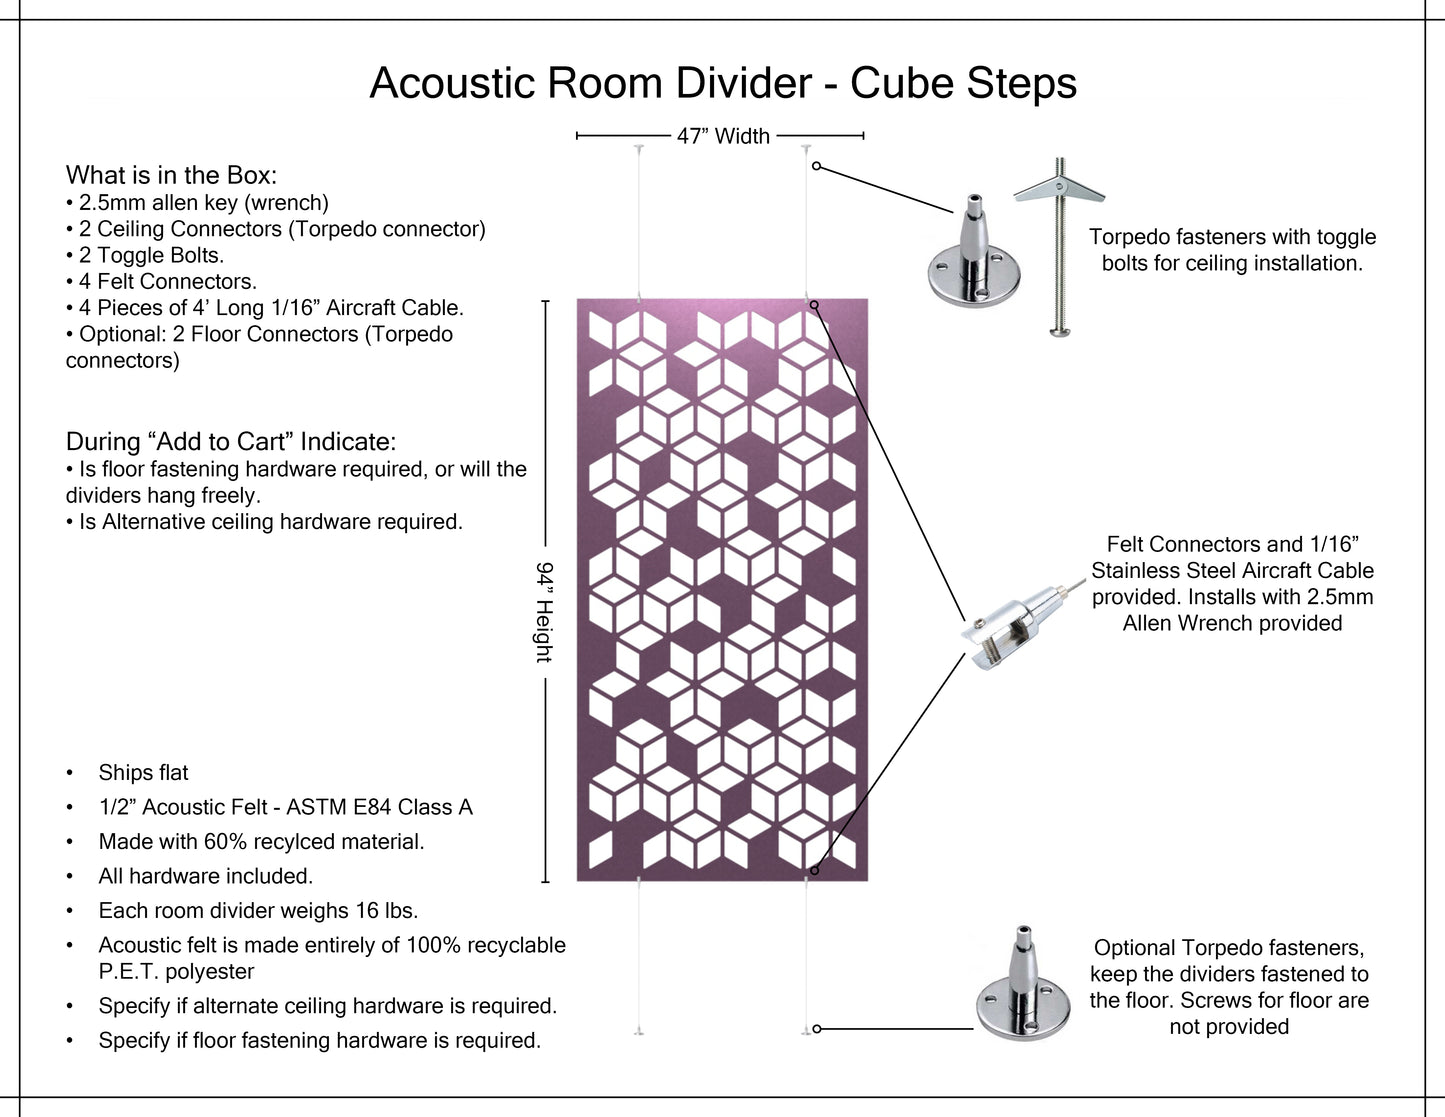 4x8 Acoustic Room Divider - Cube Steps